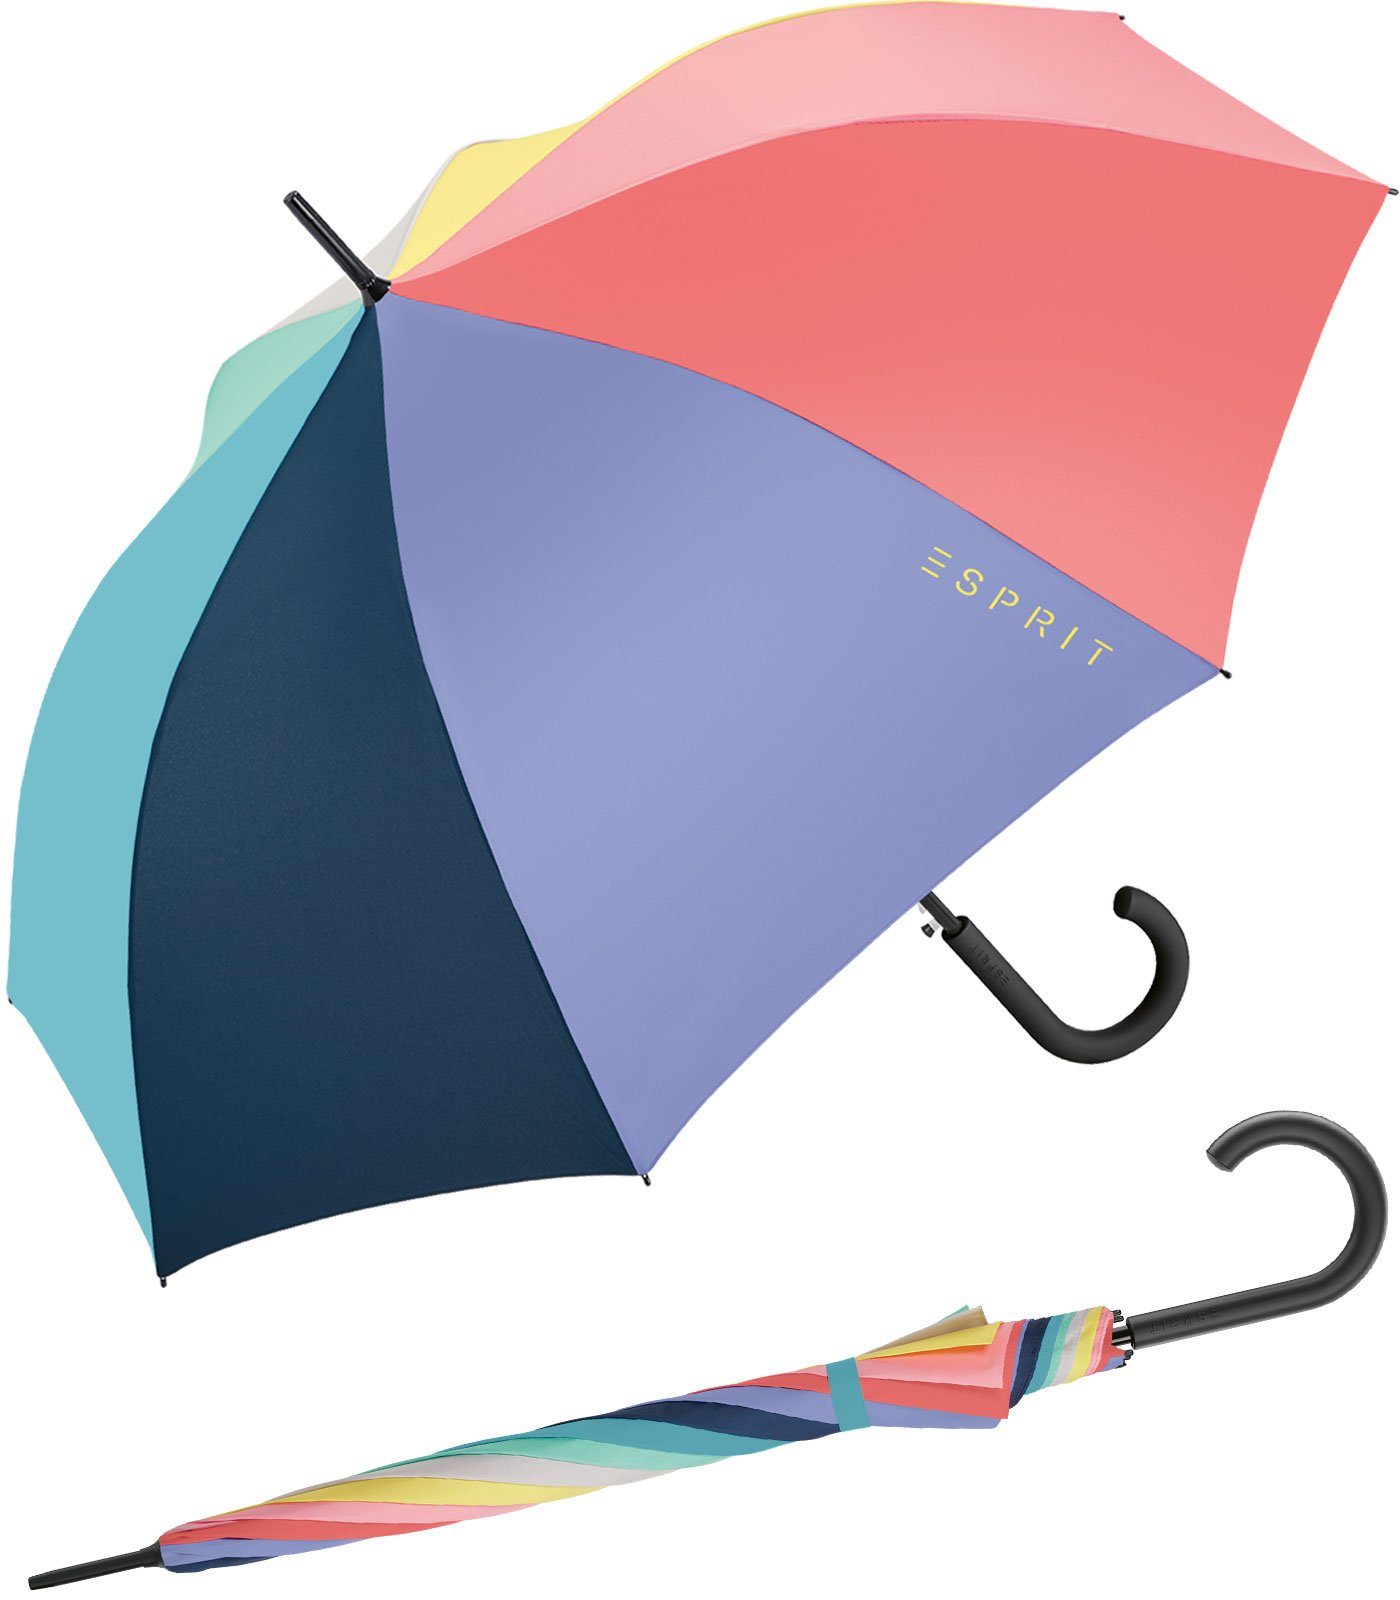 Esprit Langregenschirm Damen-Regenschirm mit Automatik FJ 2023, groß und  stabil, in den Trendfarben